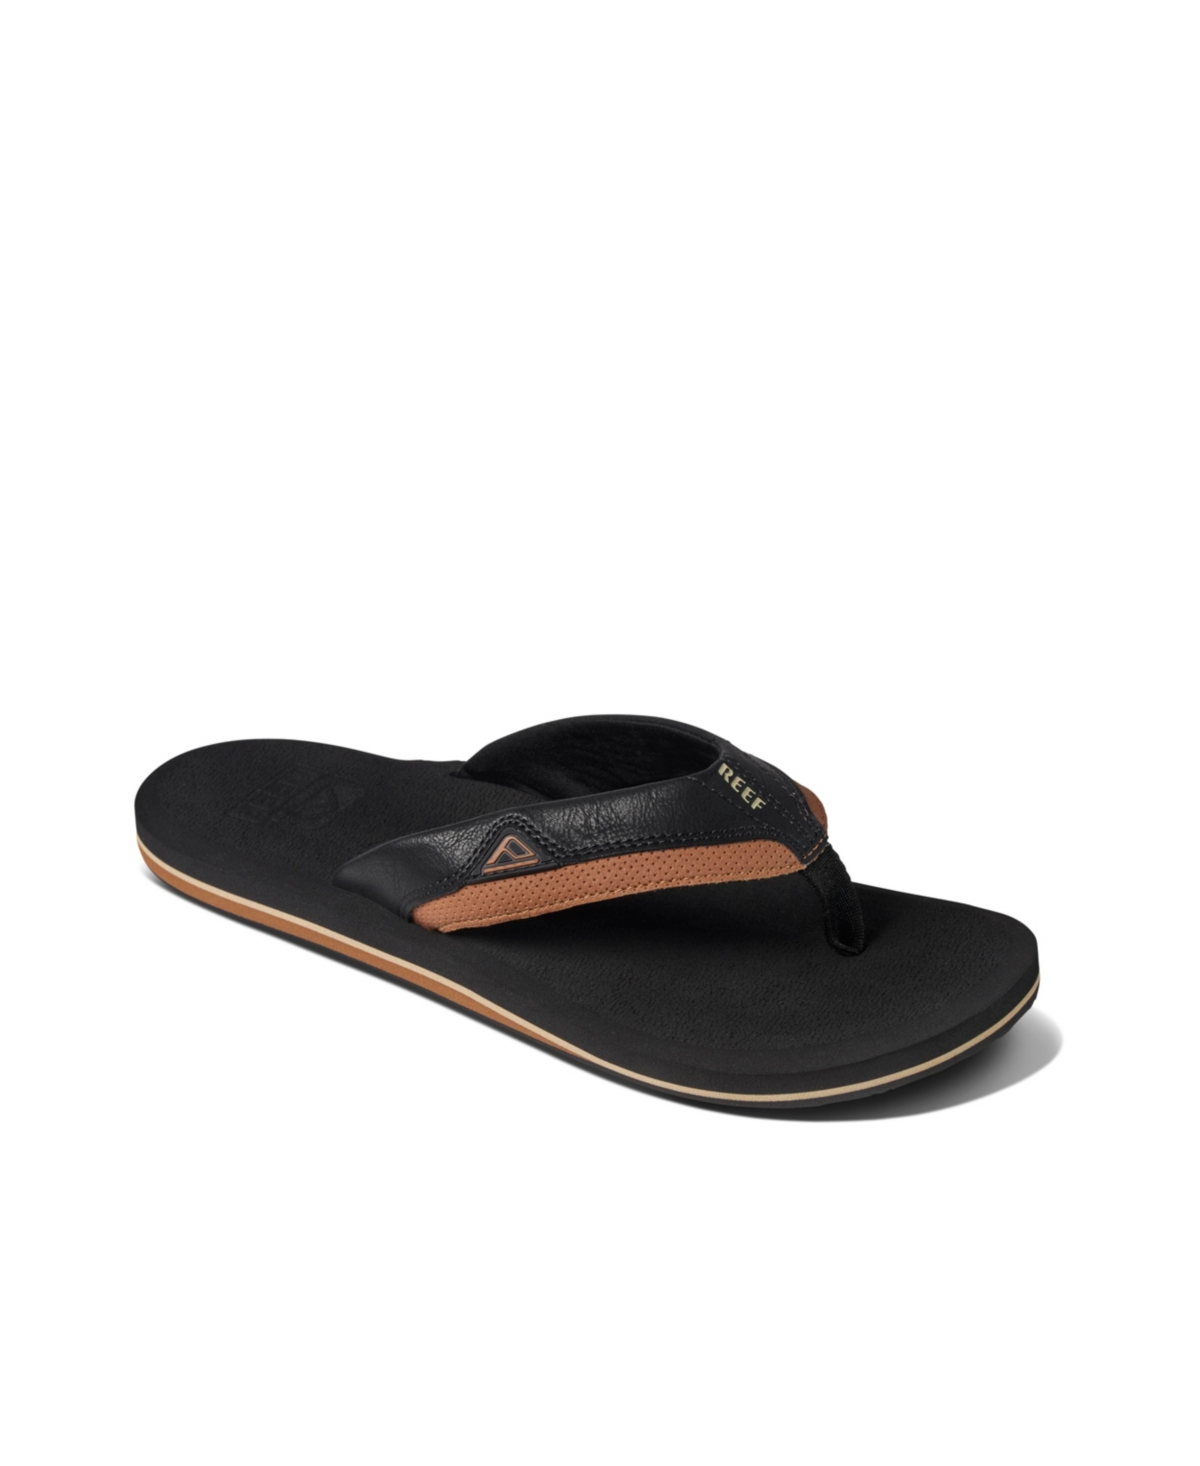 Men's Cushion Dawn Slip-On Sandals - Black, Tan